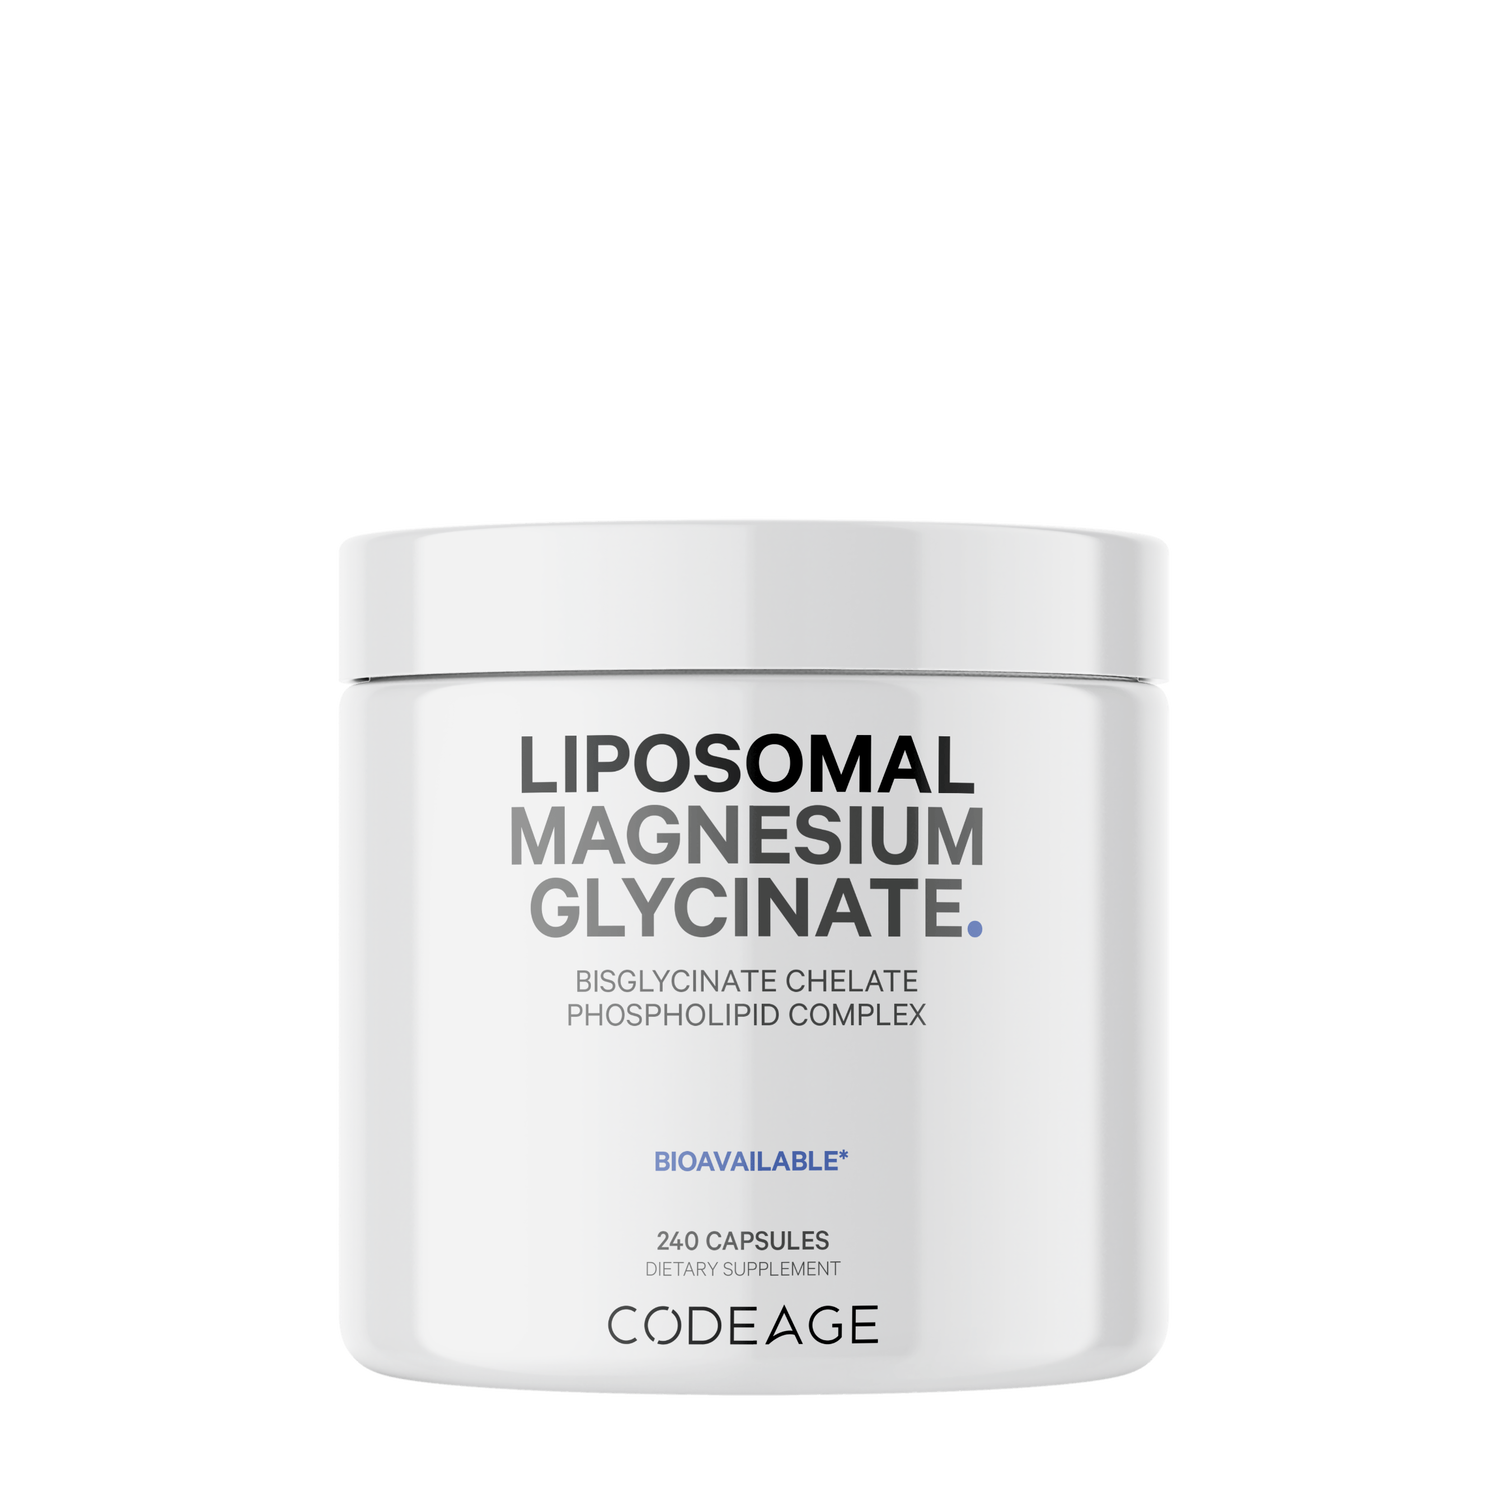 Codeage Liposomal Magnesium Glycinate Gluten-Free - 240 Capsules (60 Servings)